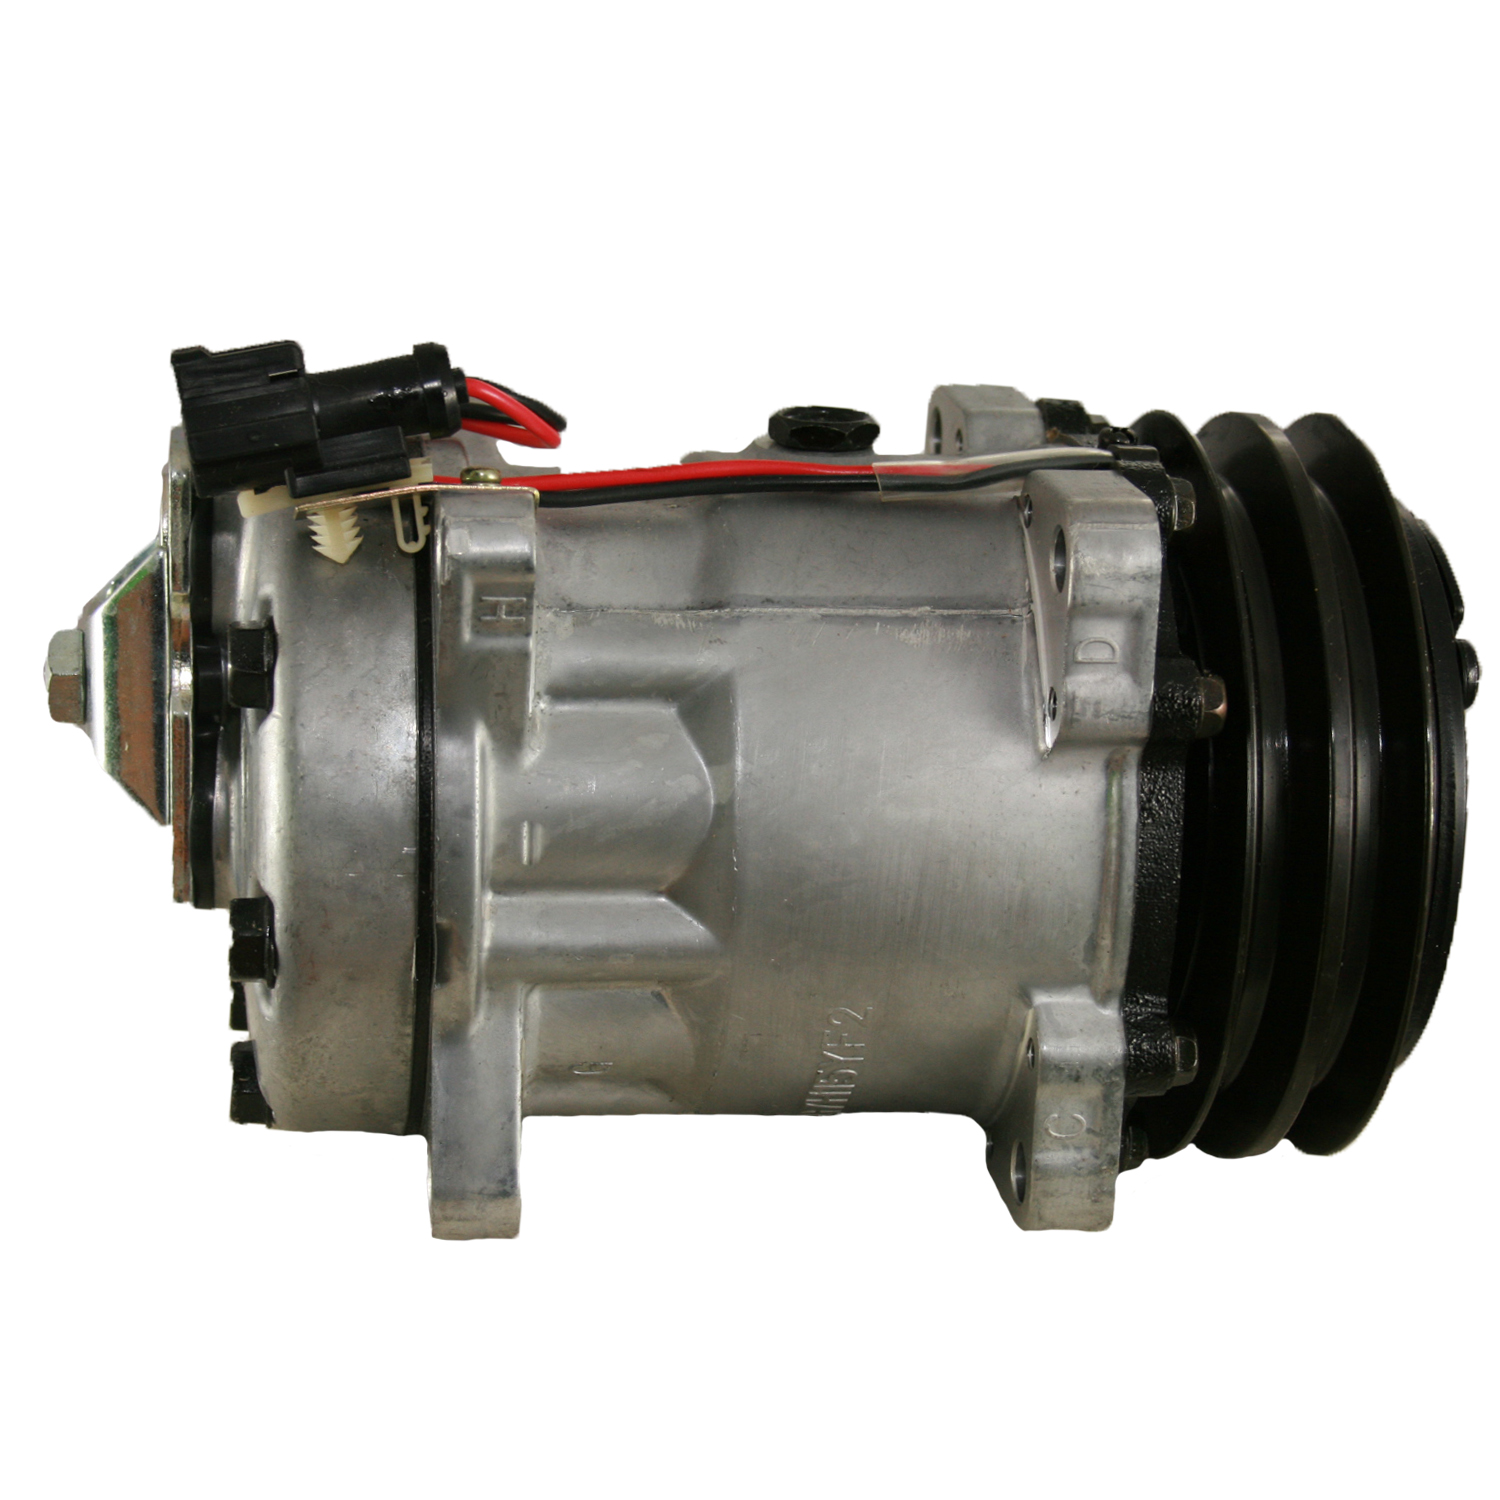 TCW Compressor 40579.201NEW New Product Image field_60b6a13a6e67c